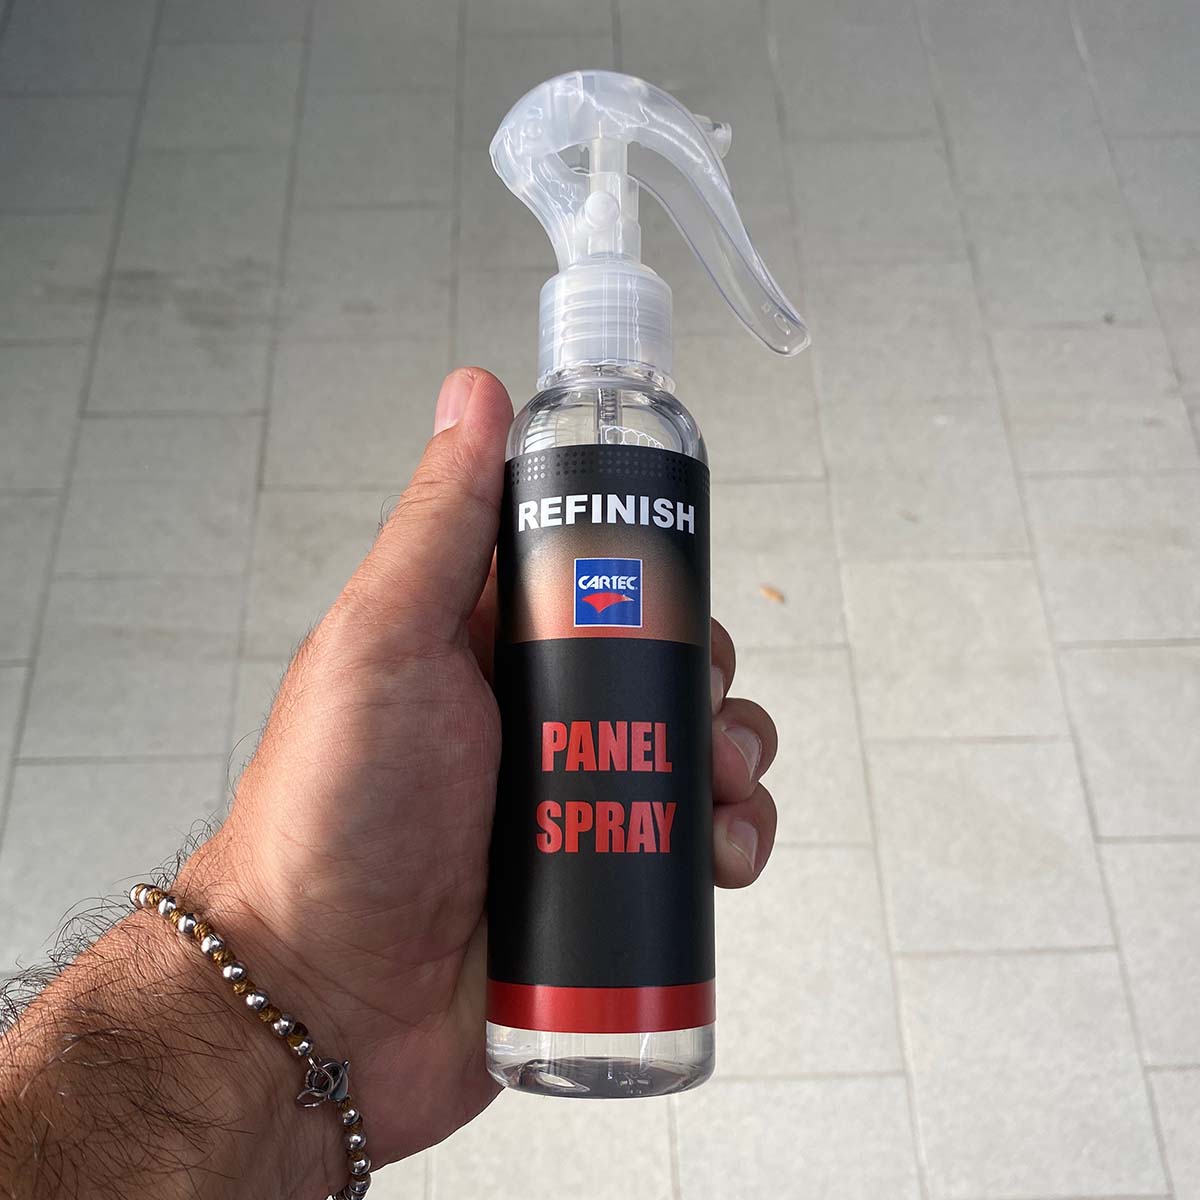 Cartec Refinish Panel Spray